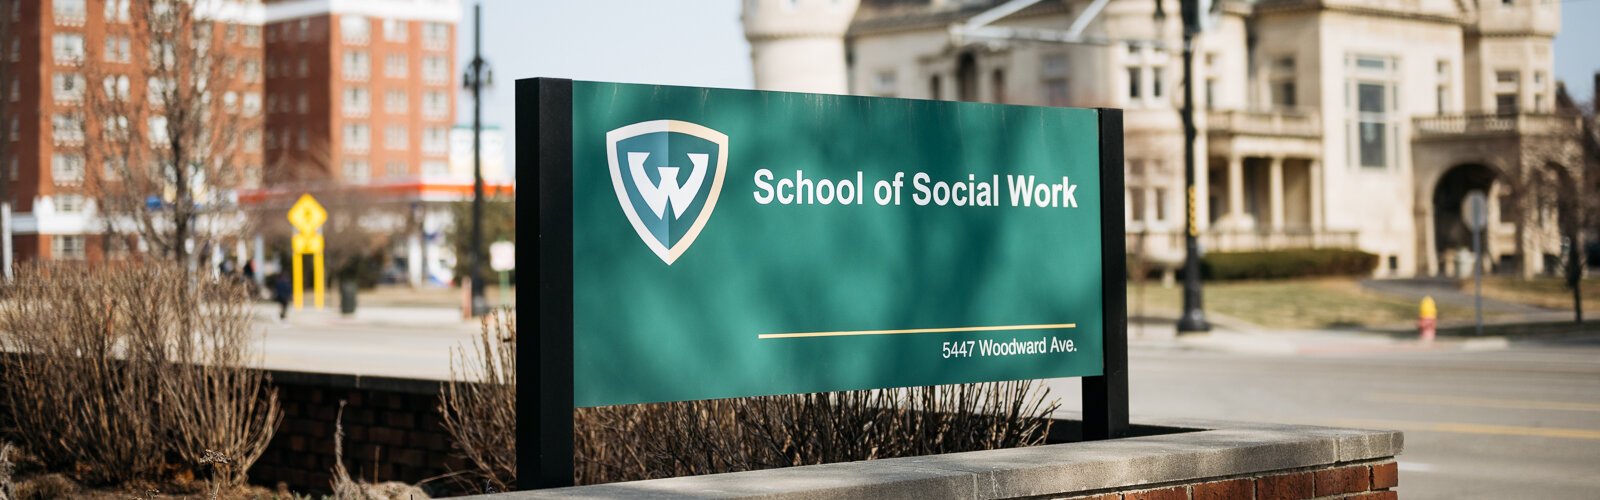 The Wayne State University School of Social Work.